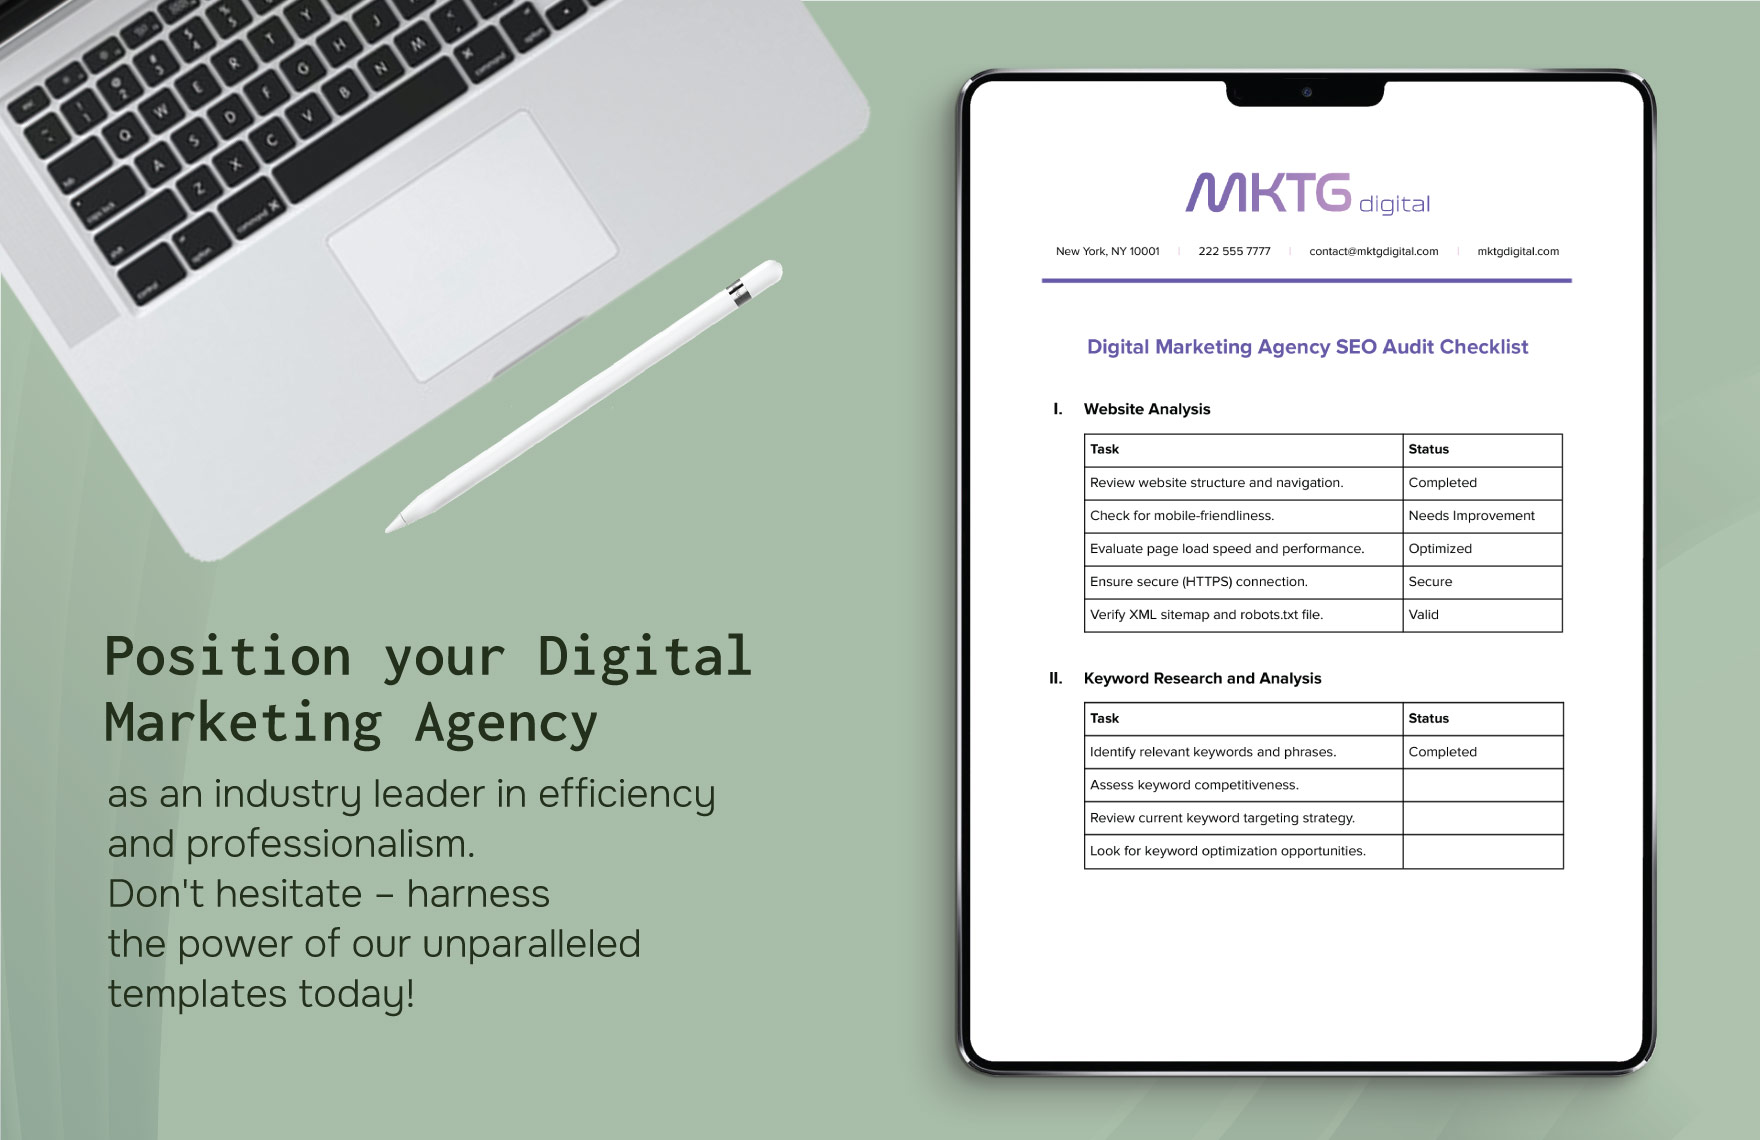 Digital Marketing Agency SEO Audit Checklist Template